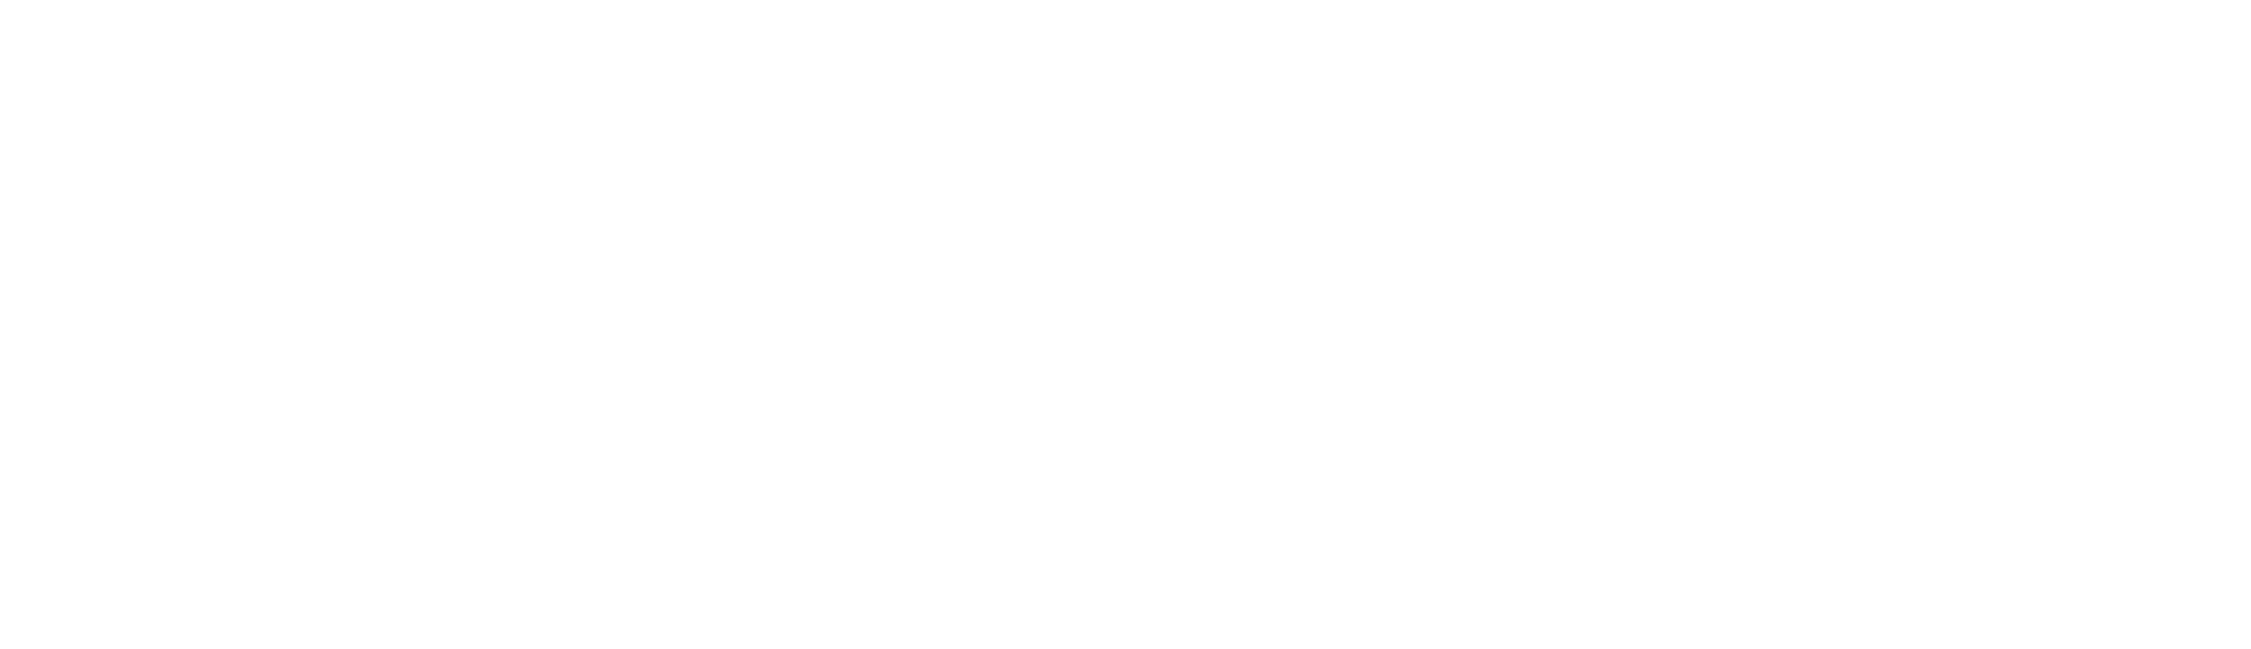 Koninklijke Bibliotheek Logo White